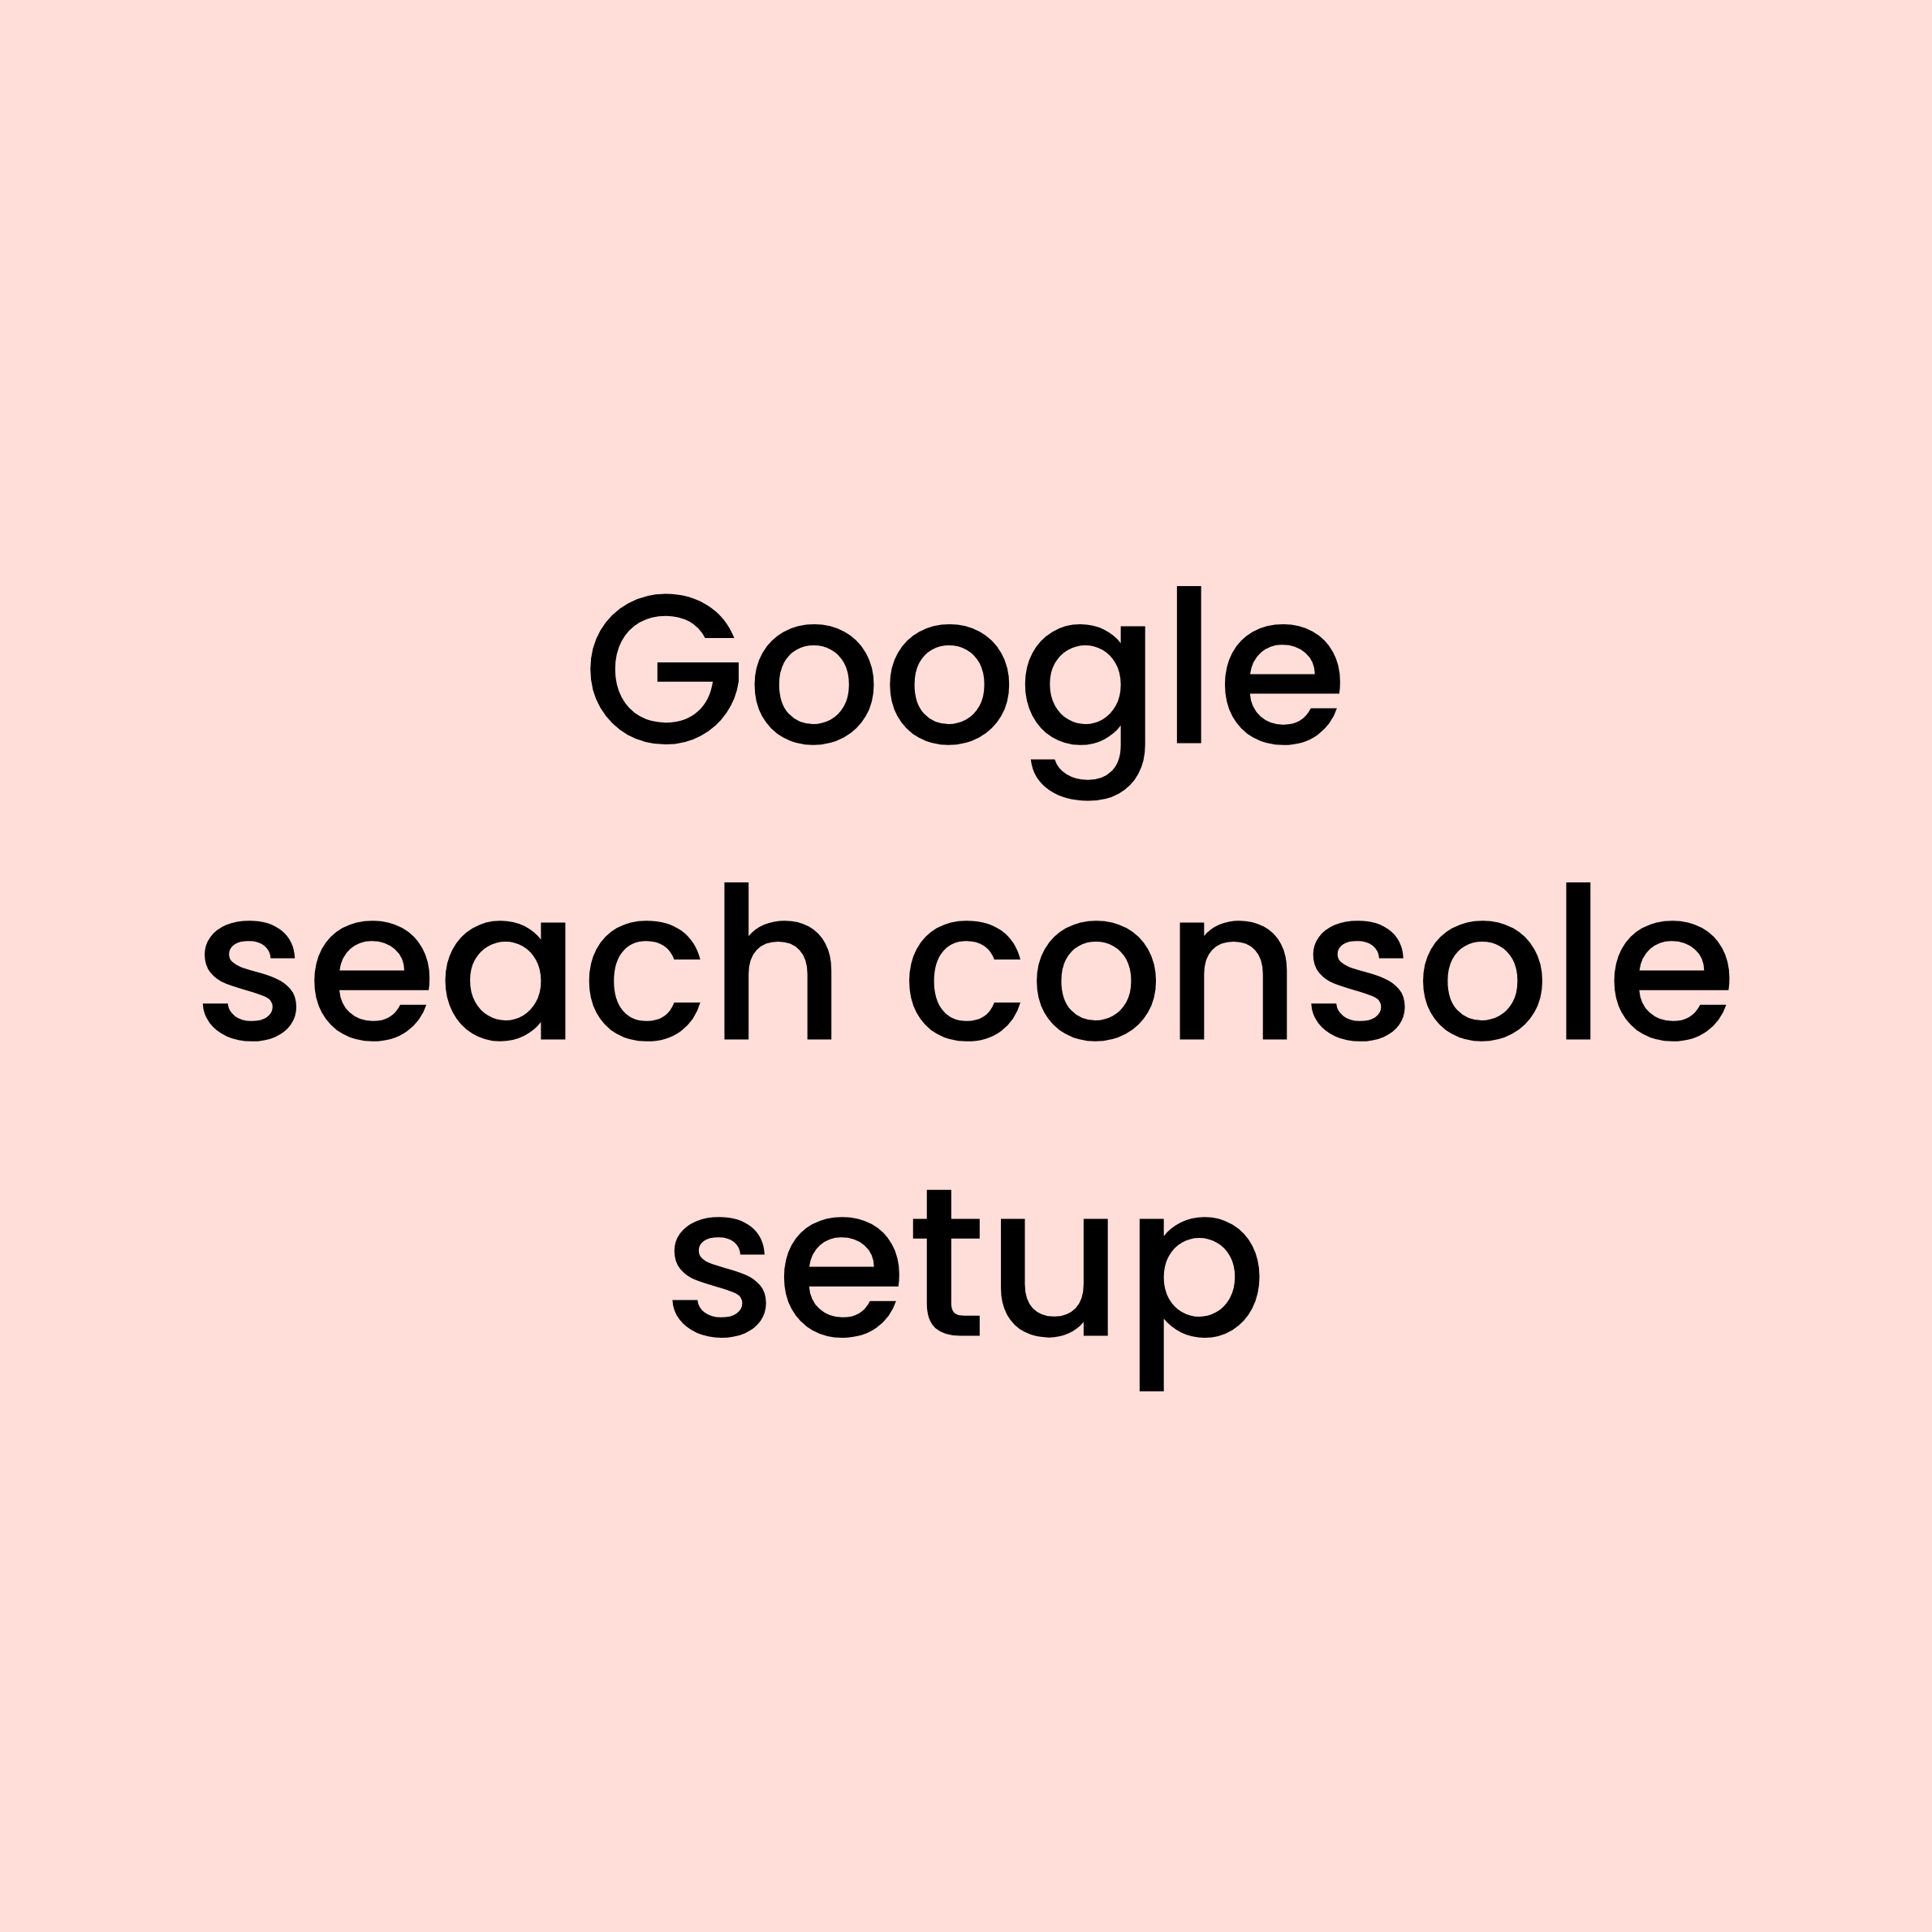 Google search console setup